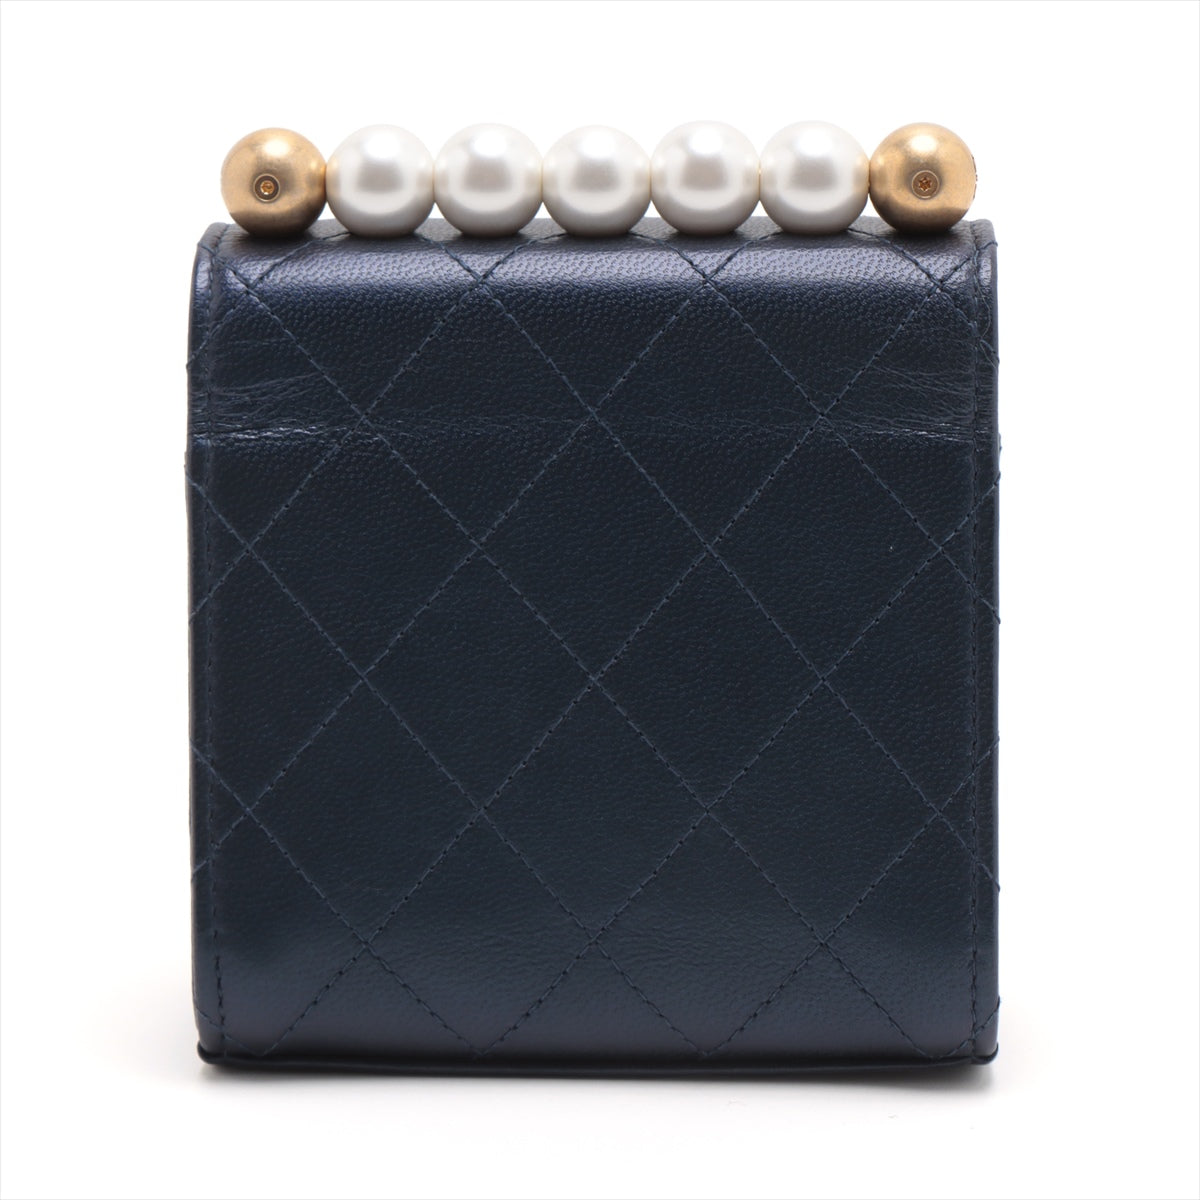 Chanel Matelasse Lambskin Chain shoulder bag Pearl Navy blue Gold Metal fittings 29th